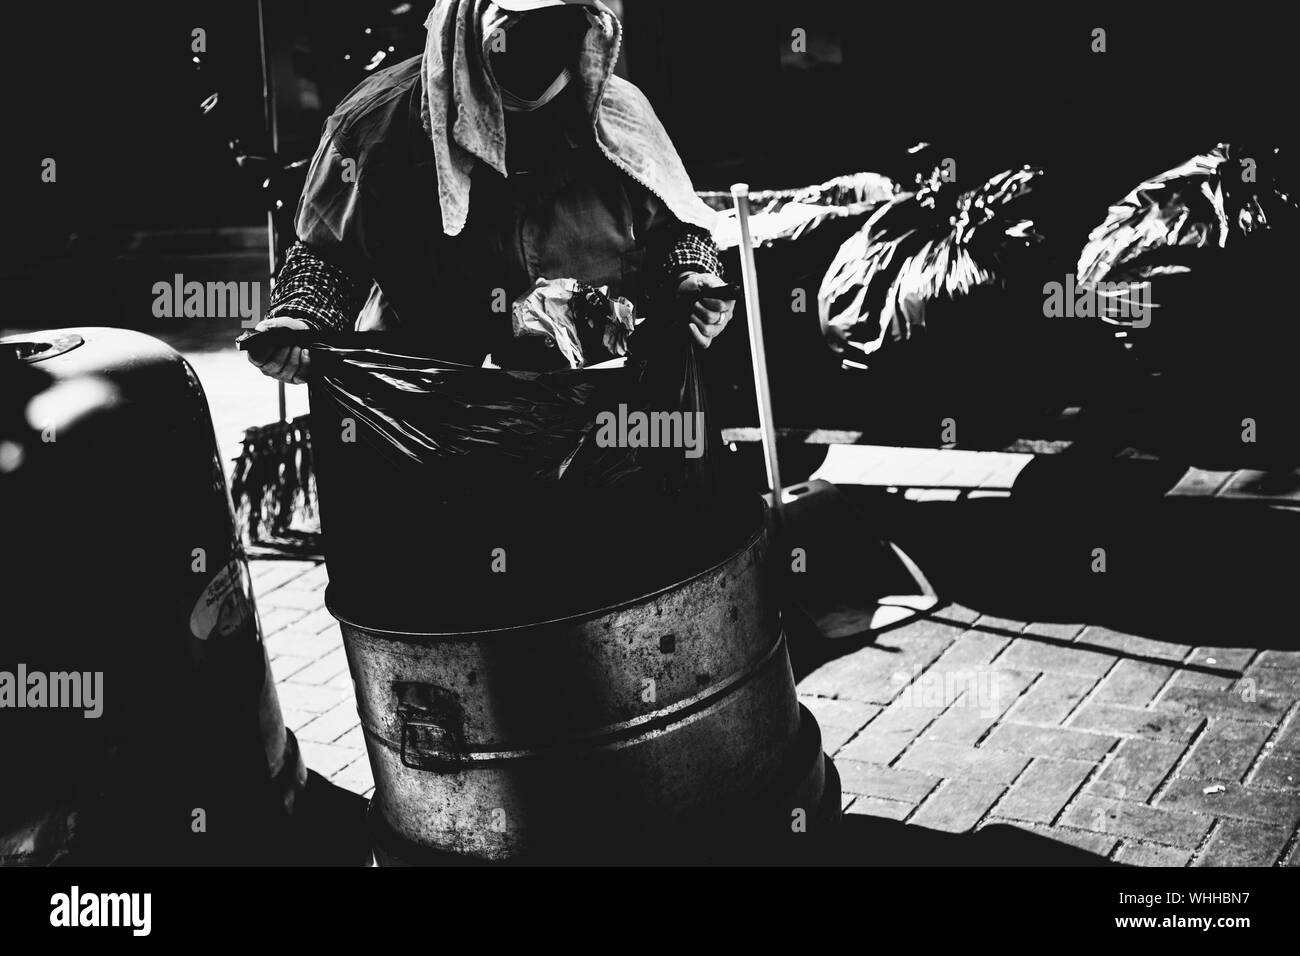 Sanitation Worker Holding Garbage Bag On Street Stock Photo